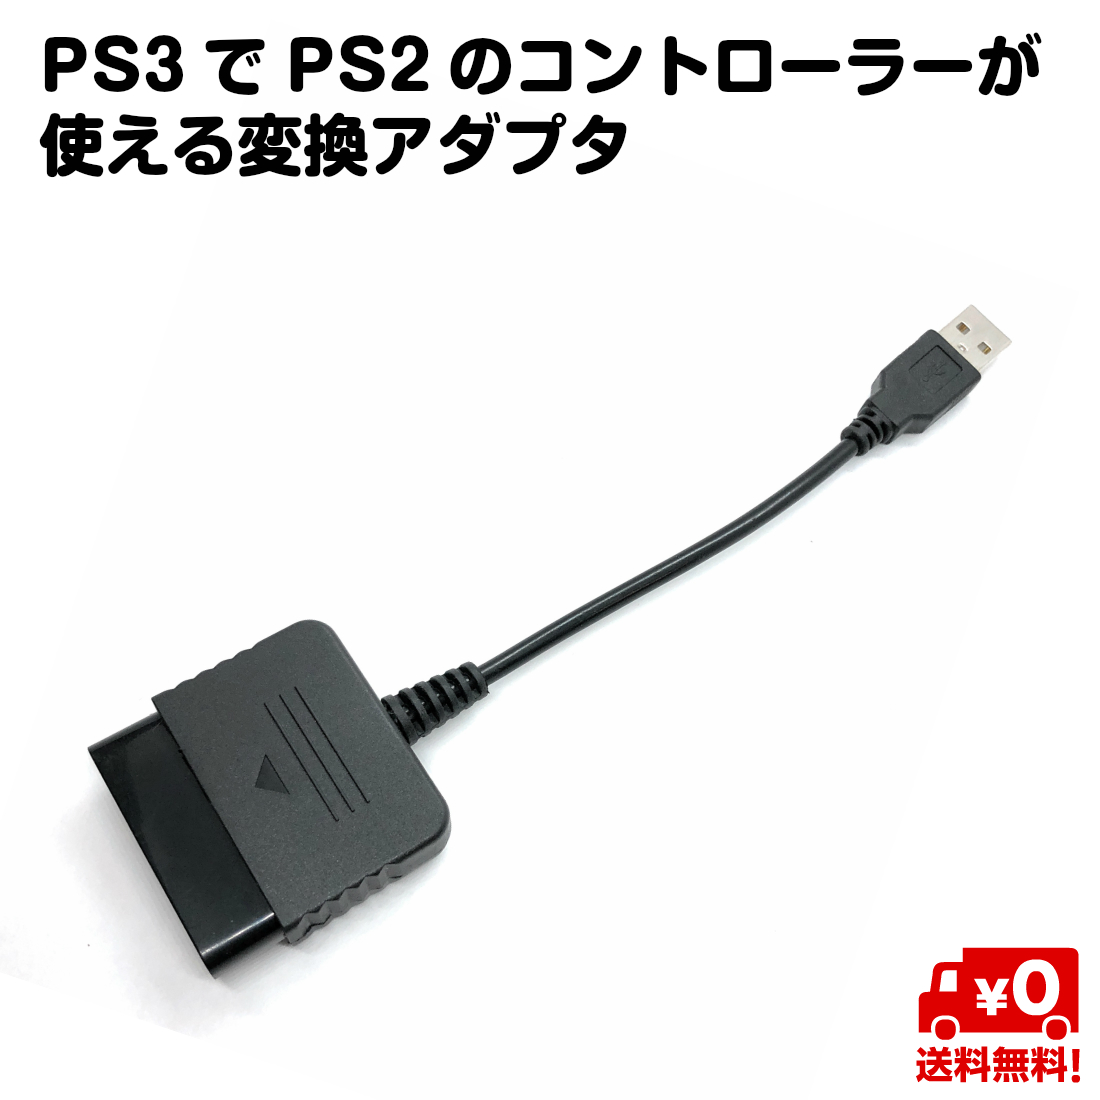 PS3 PS2 コントローラー 変換 アダプタ 互換 プレイステーション 送料無料 売れ筋新商品